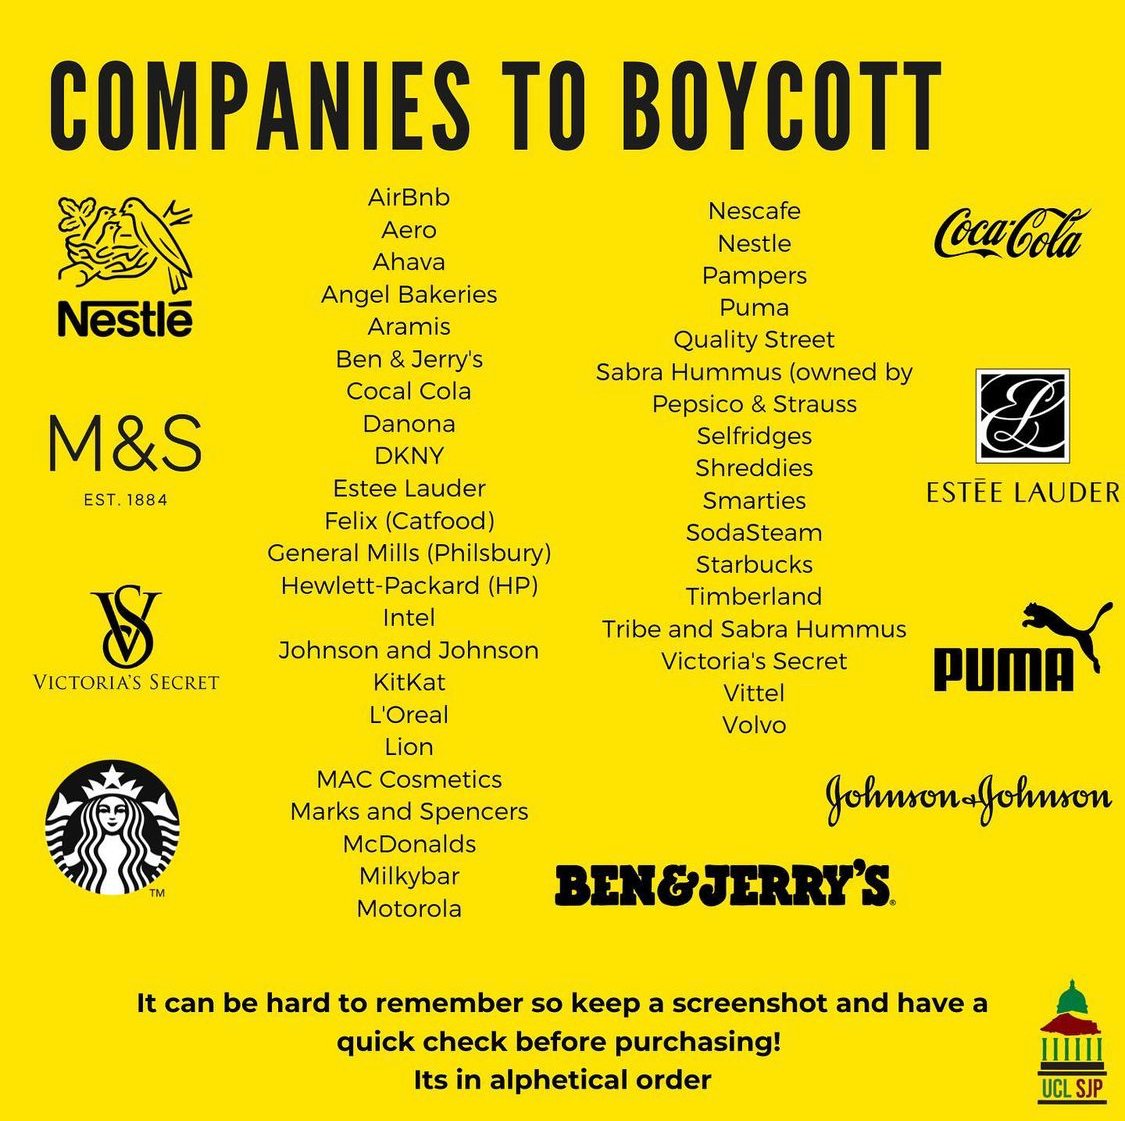 Companies to boycott